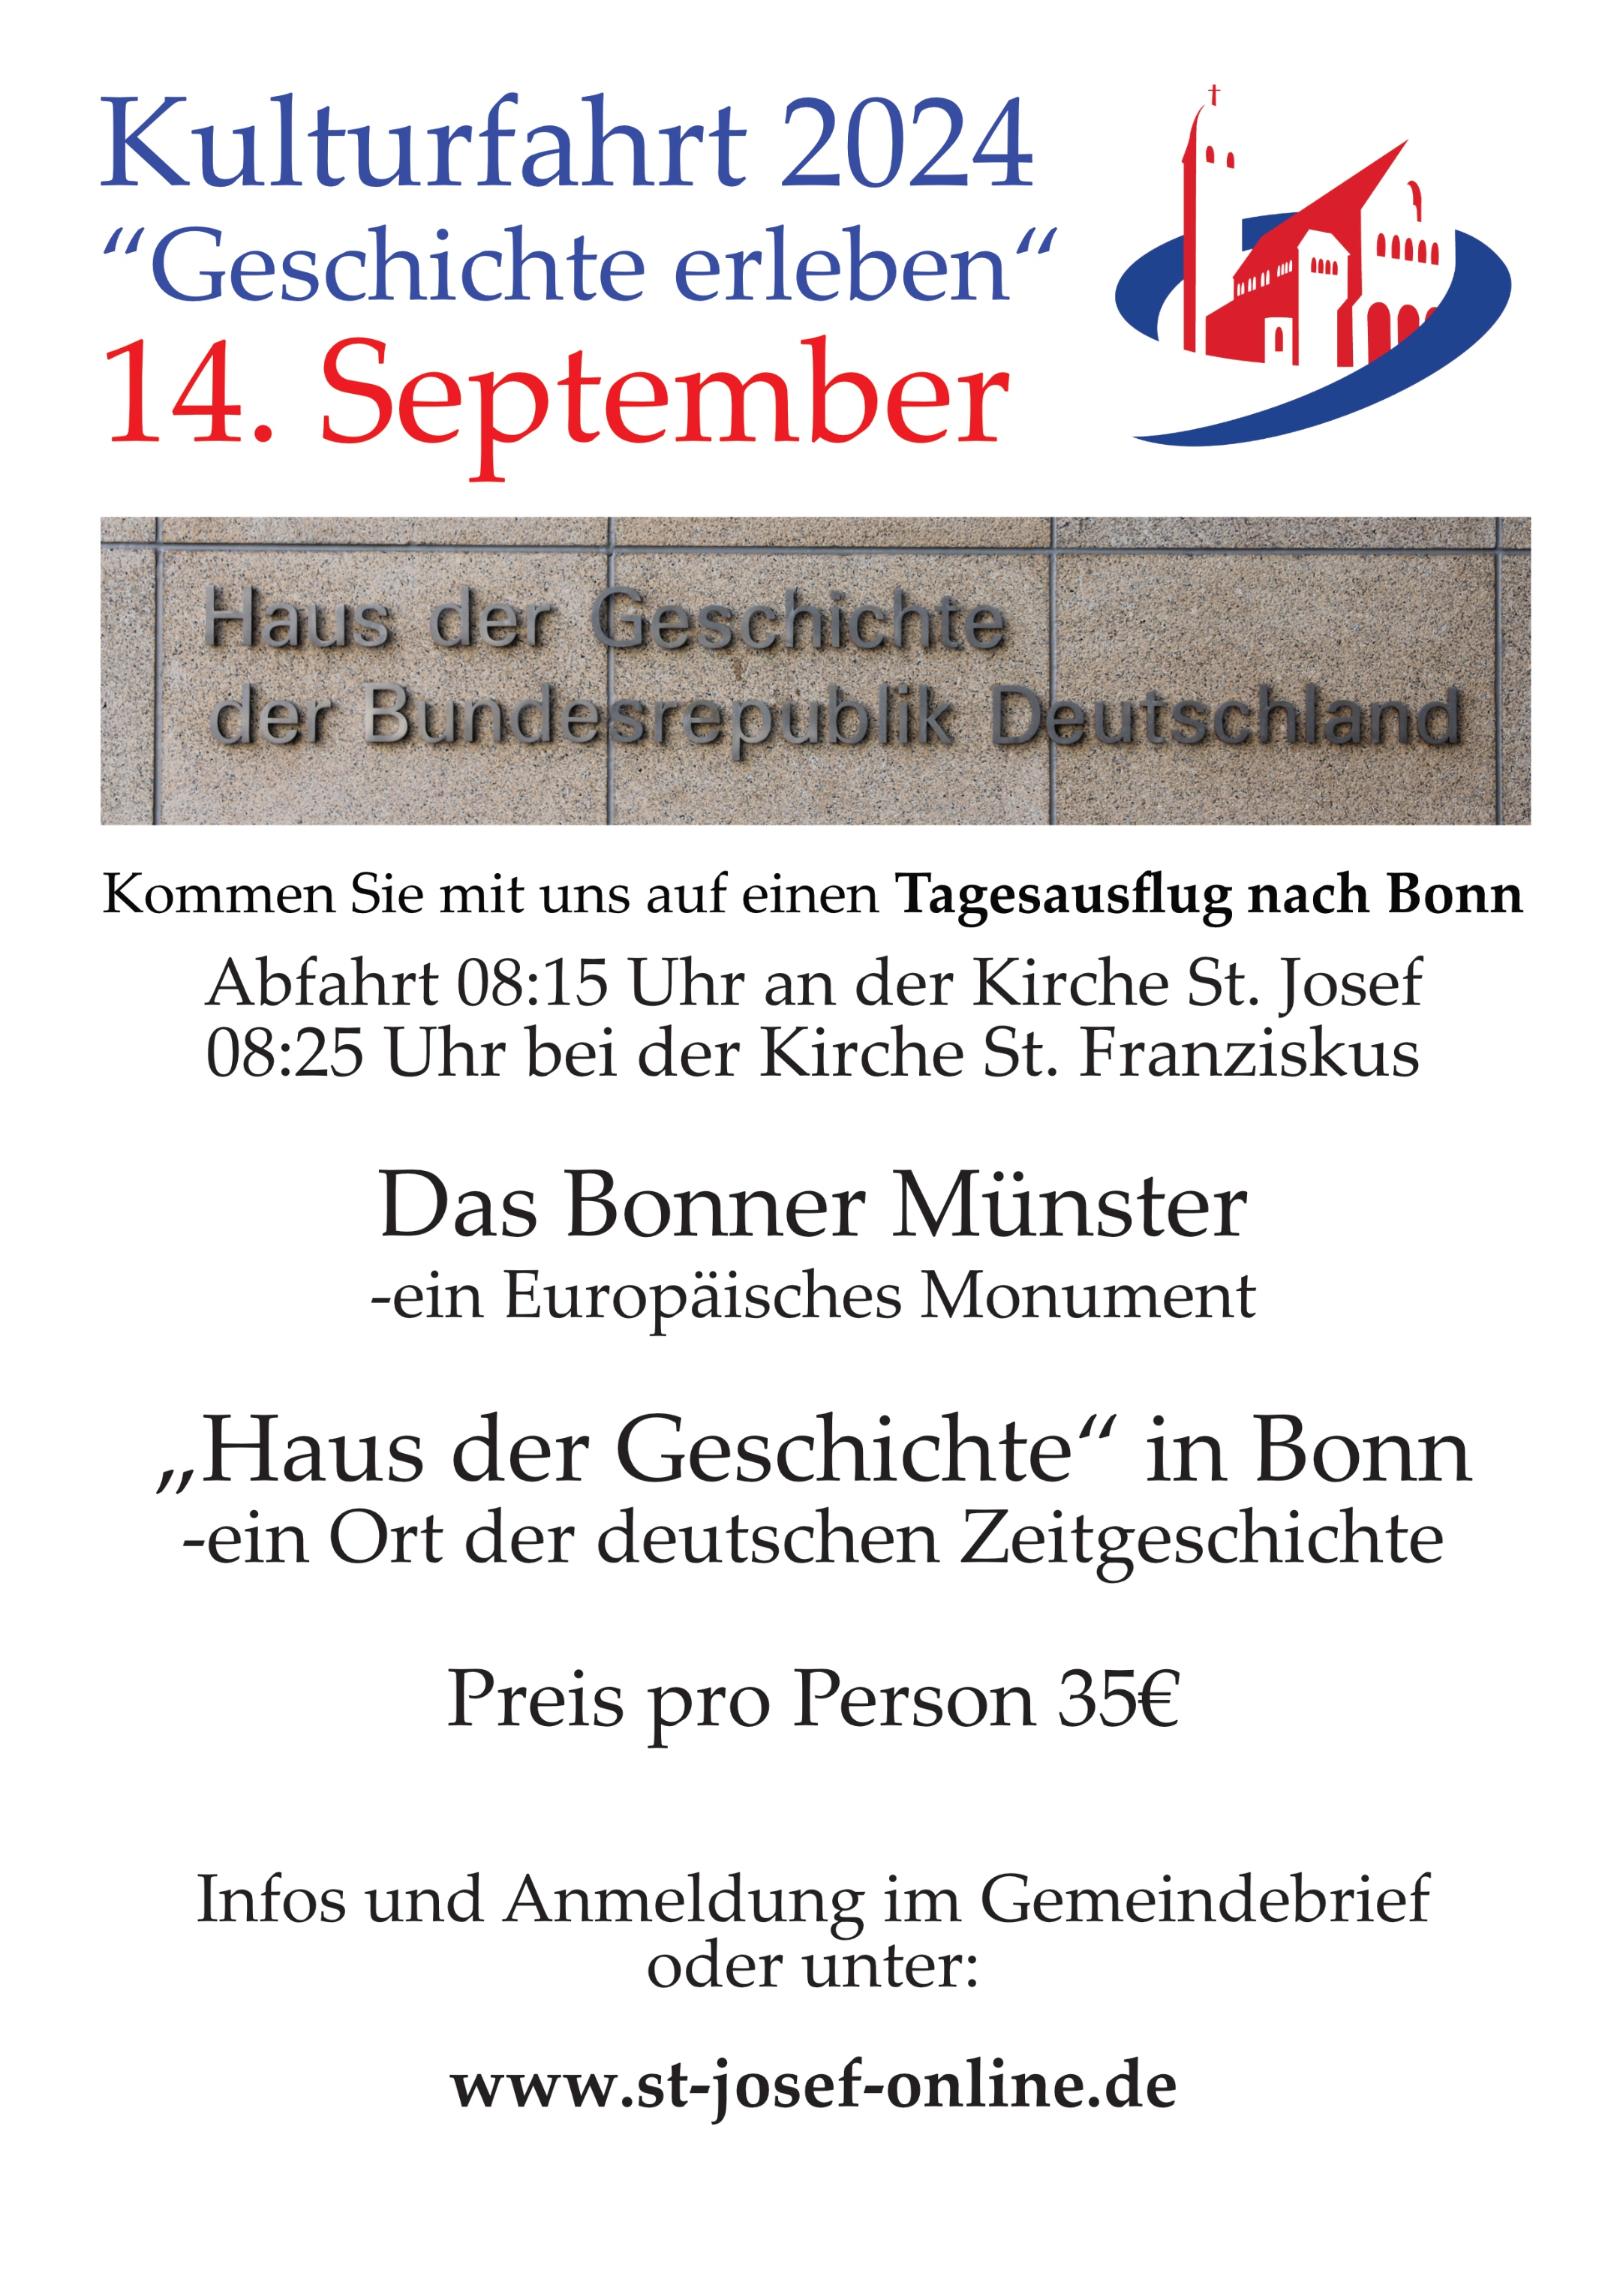 Kulturfahrt Bonn 2024 (c) D. Thiel